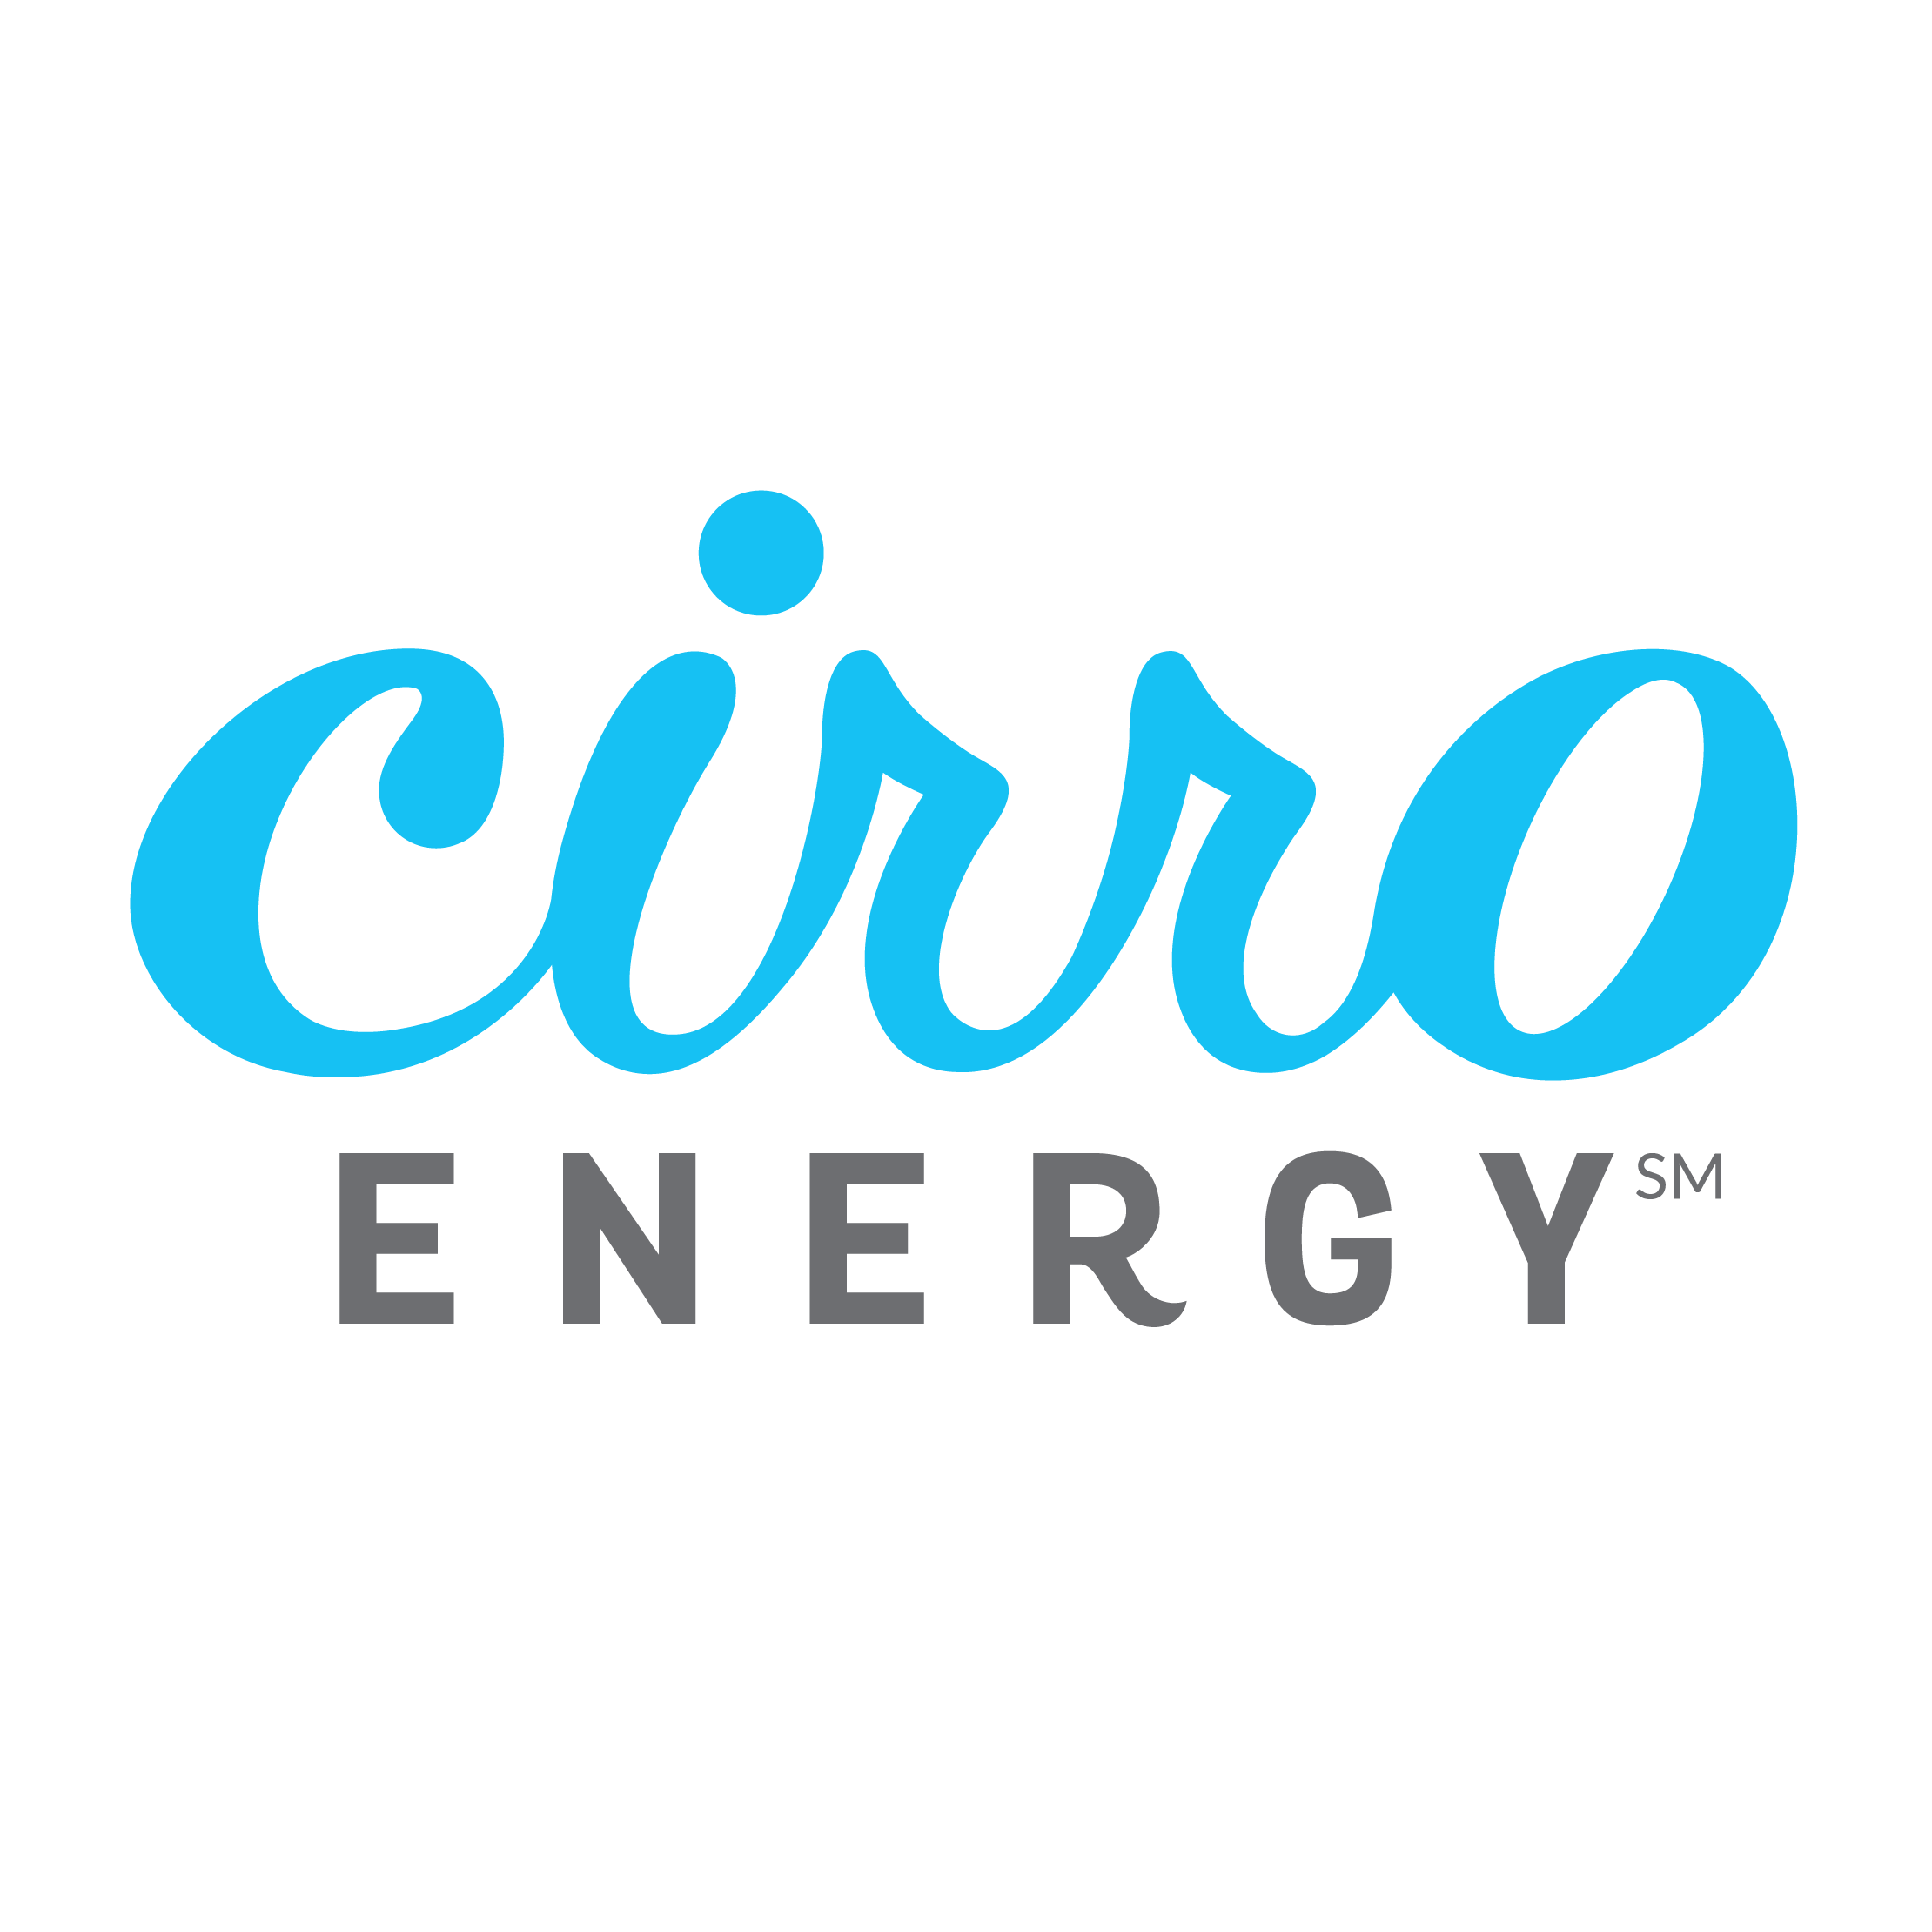 Cirro Energy